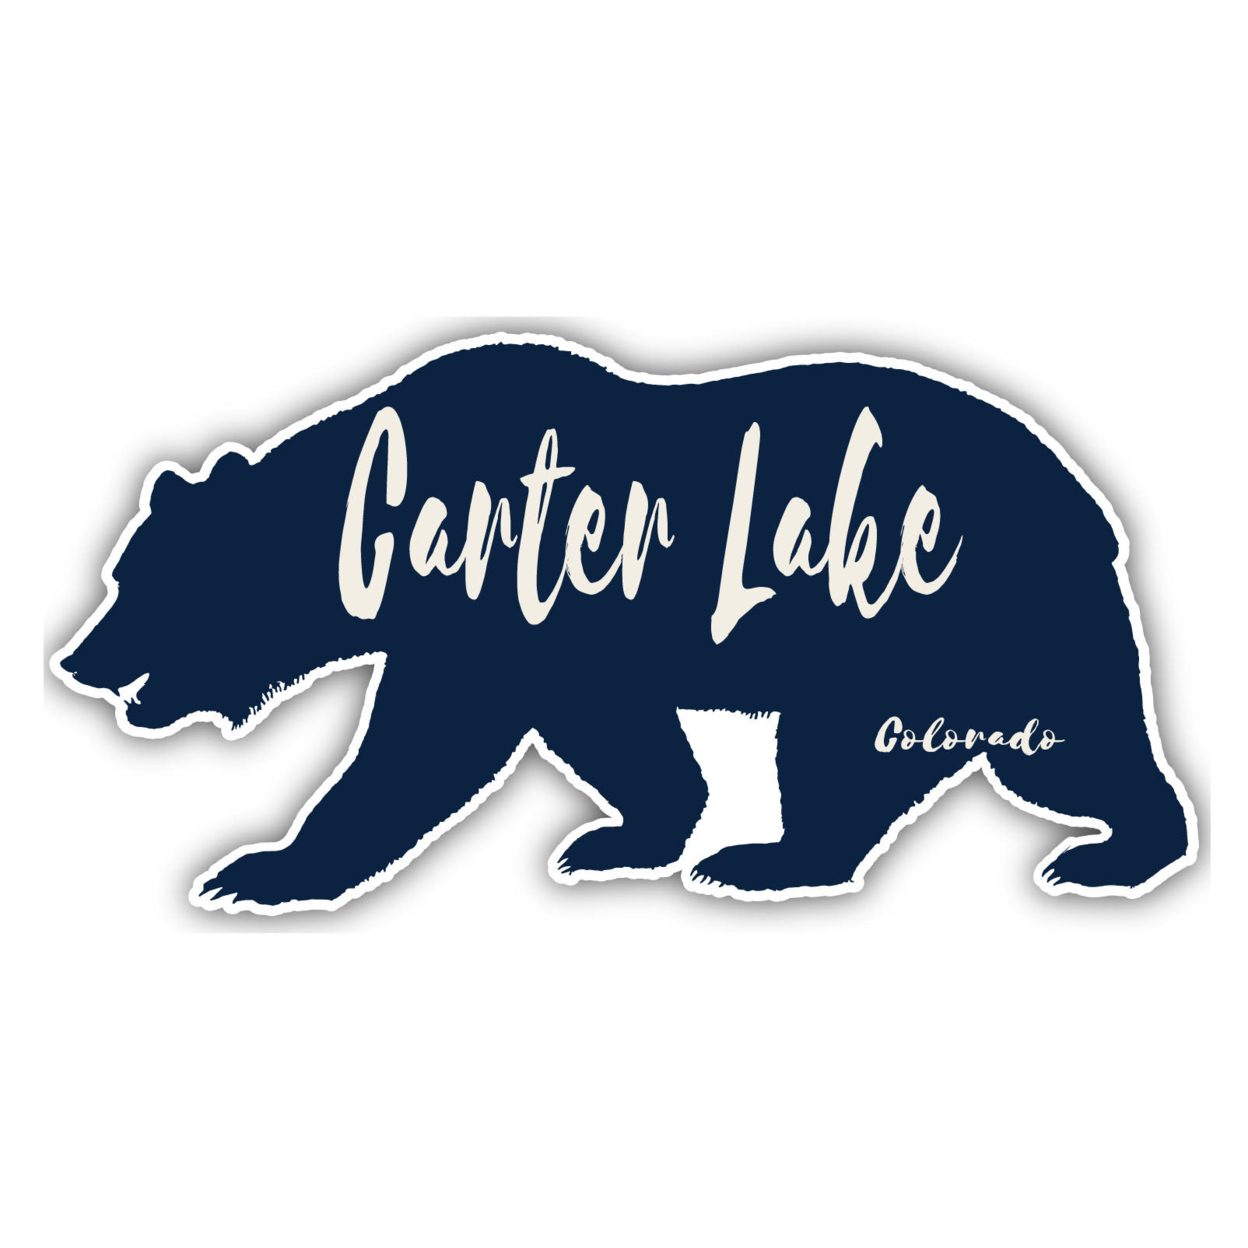 Carter Lake Colorado Souvenir Decorative Stickers (Choose Theme And Size) - Single Unit, 8-Inch, Camp Life